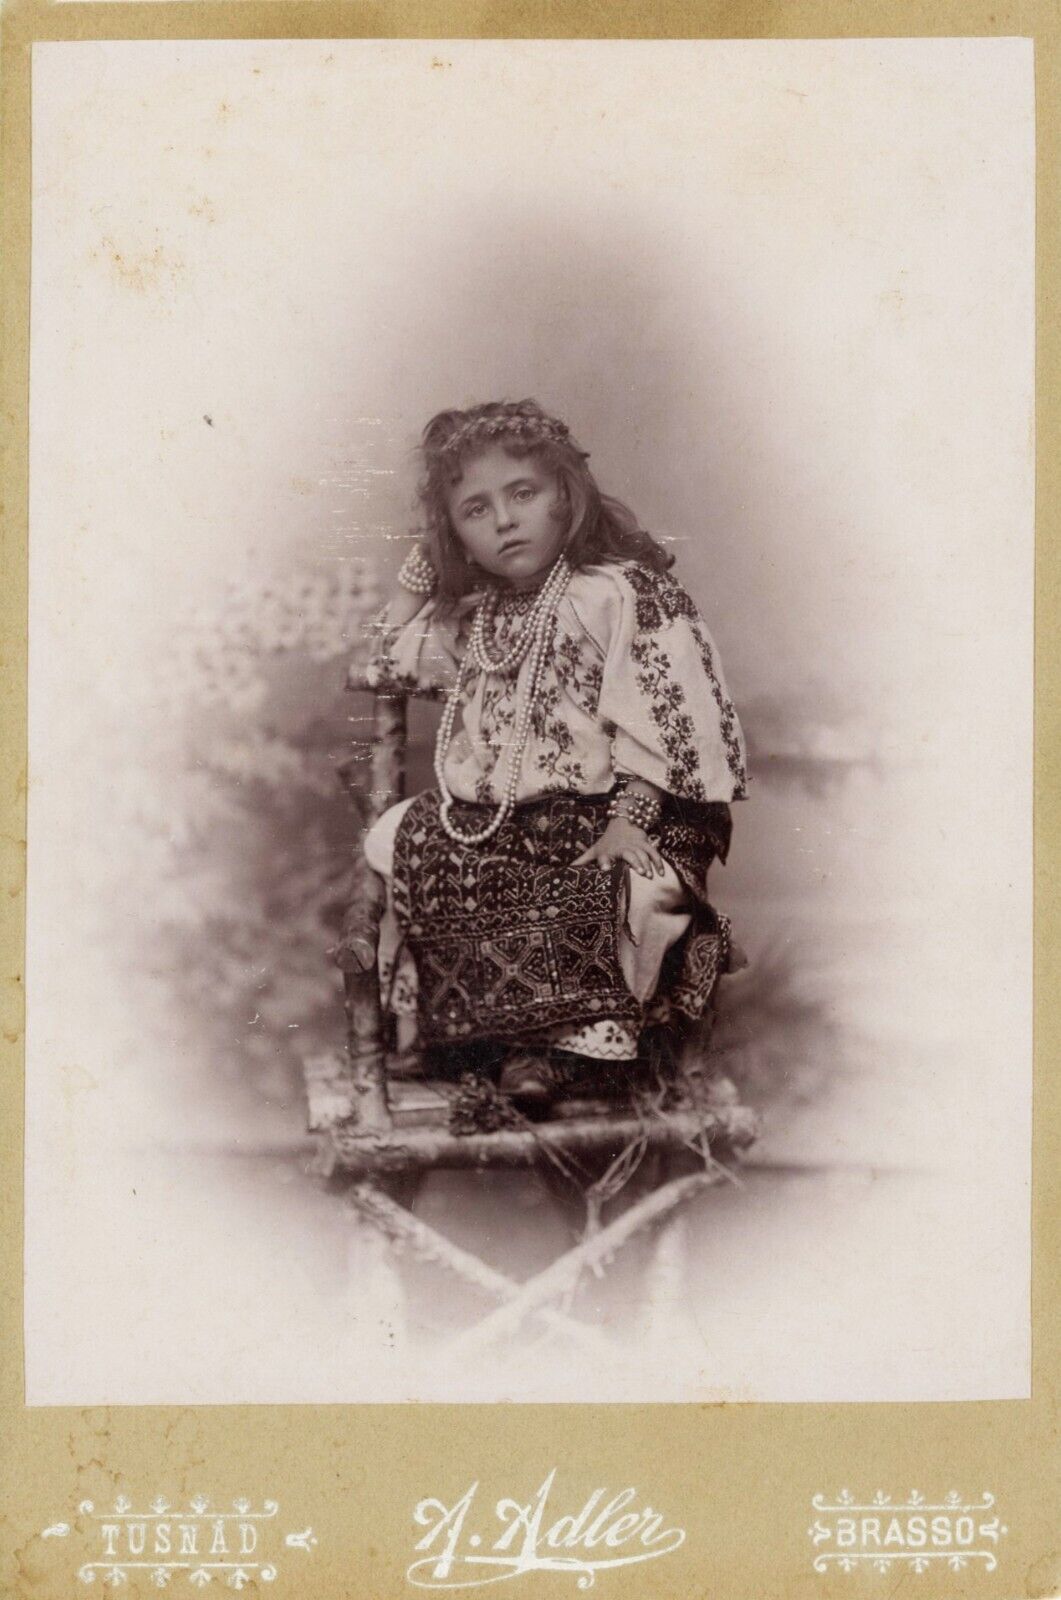 Transylvanian (Romanian) folk costume, Late 1800s. Photographer: A Adler.